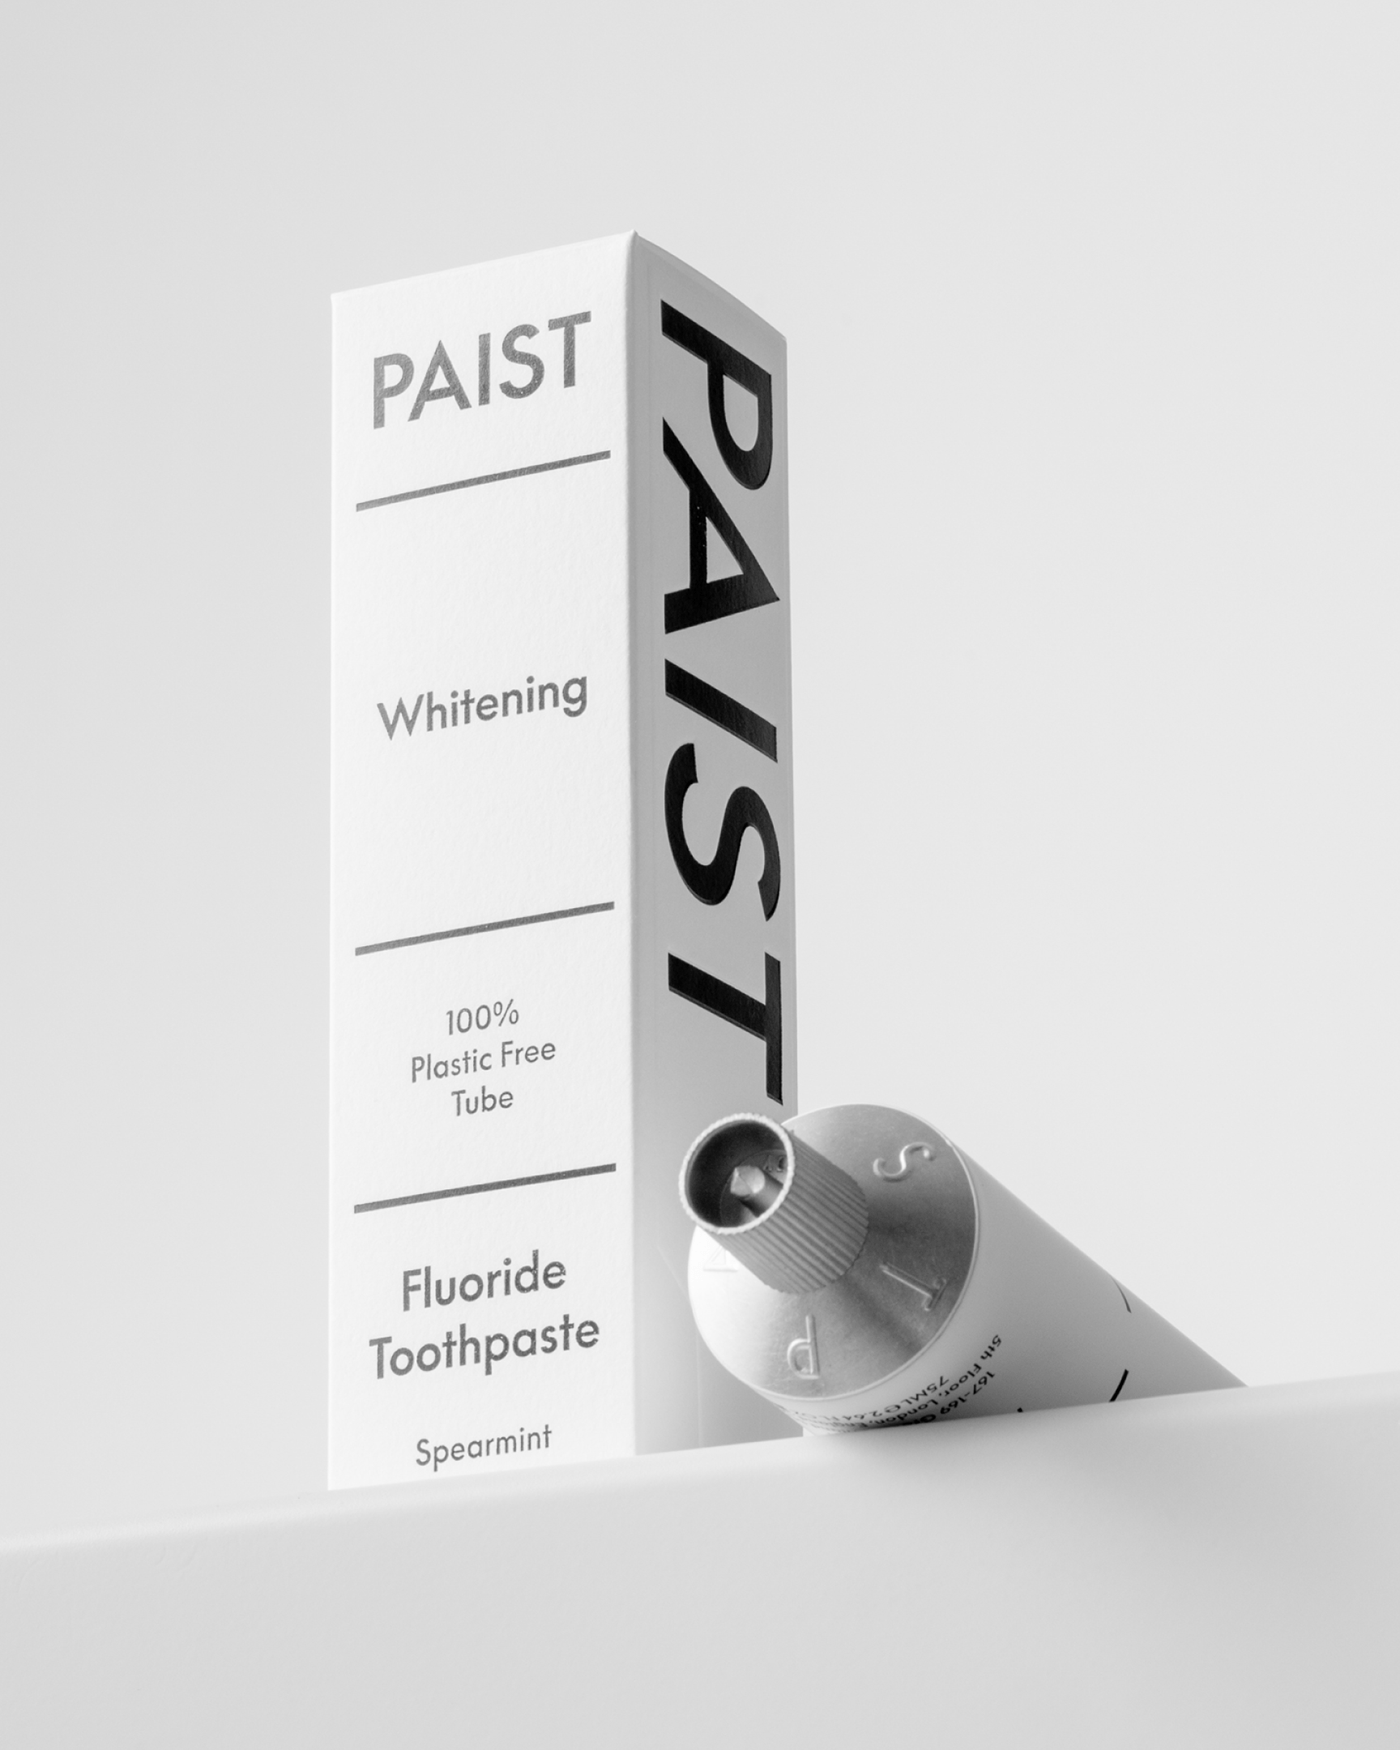 Paist's Rebranding